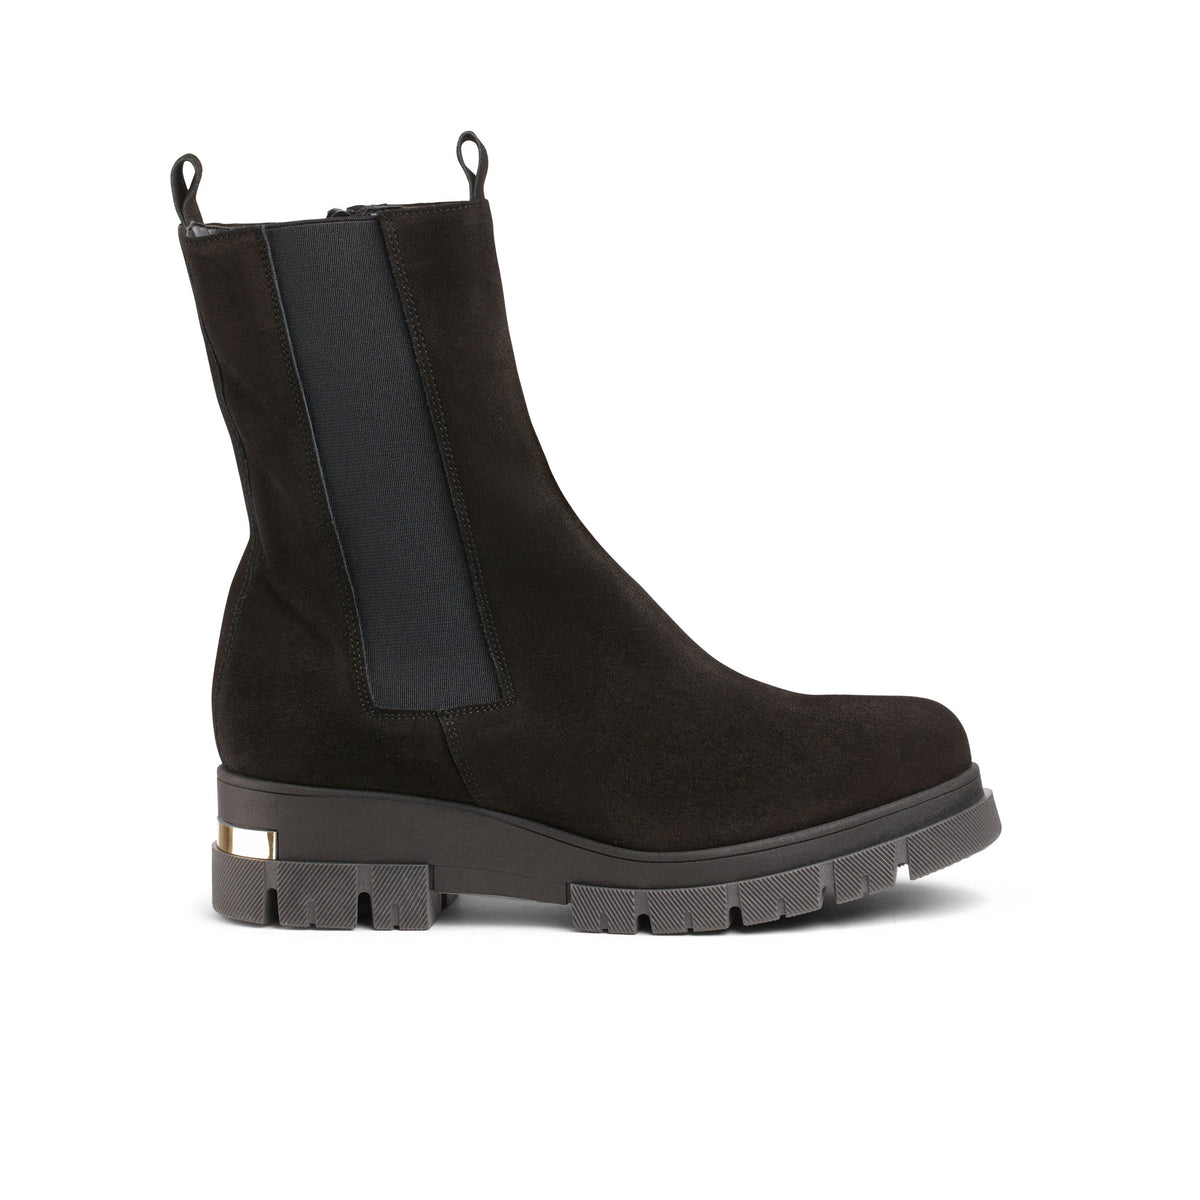 Waterproof Brienza Boots